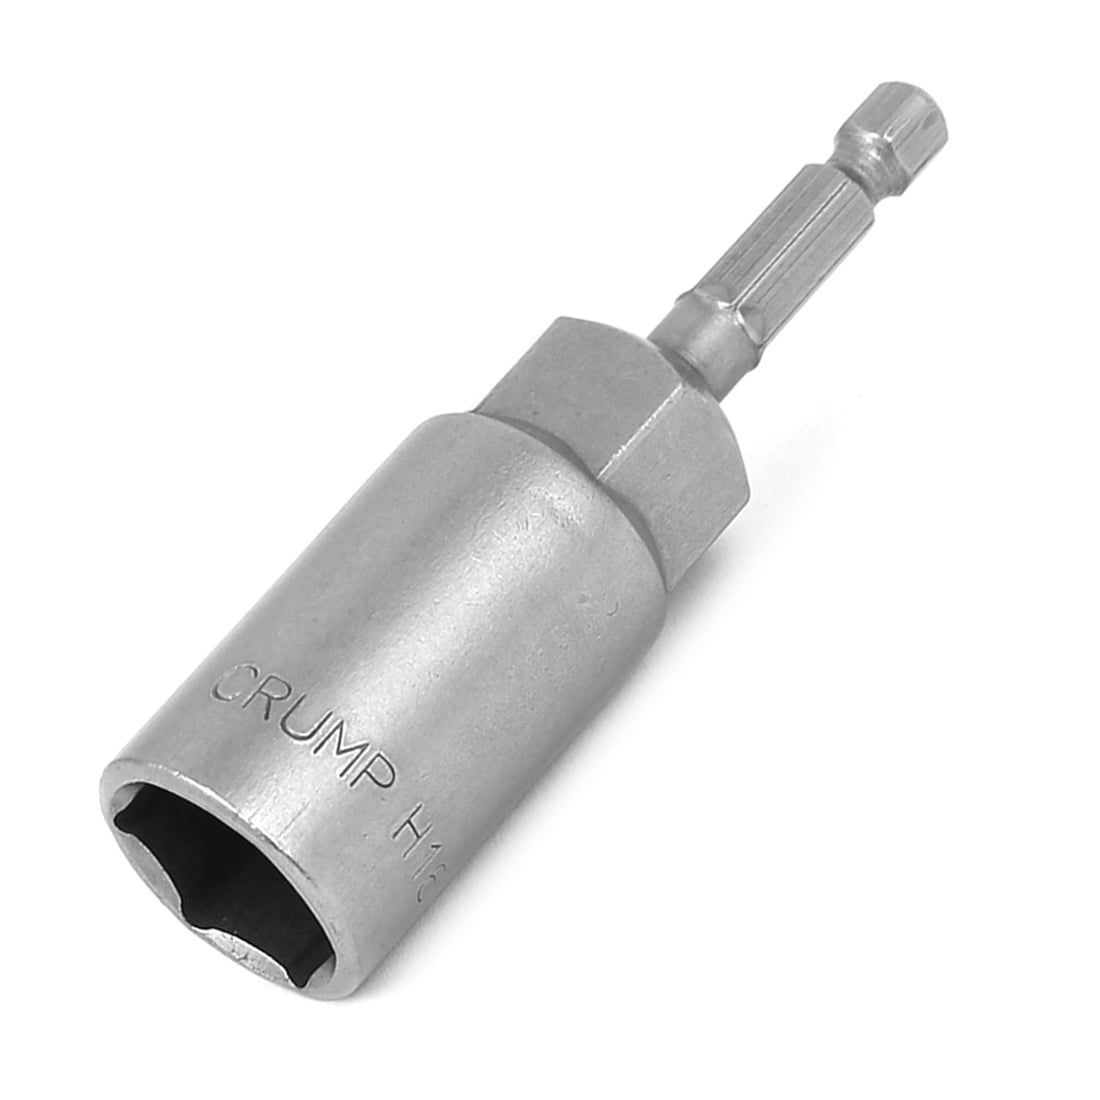 H16 80mm Long 1/4" Shank 16mm Hex Socket Impact Nut Setter Driver Bit Adapter 